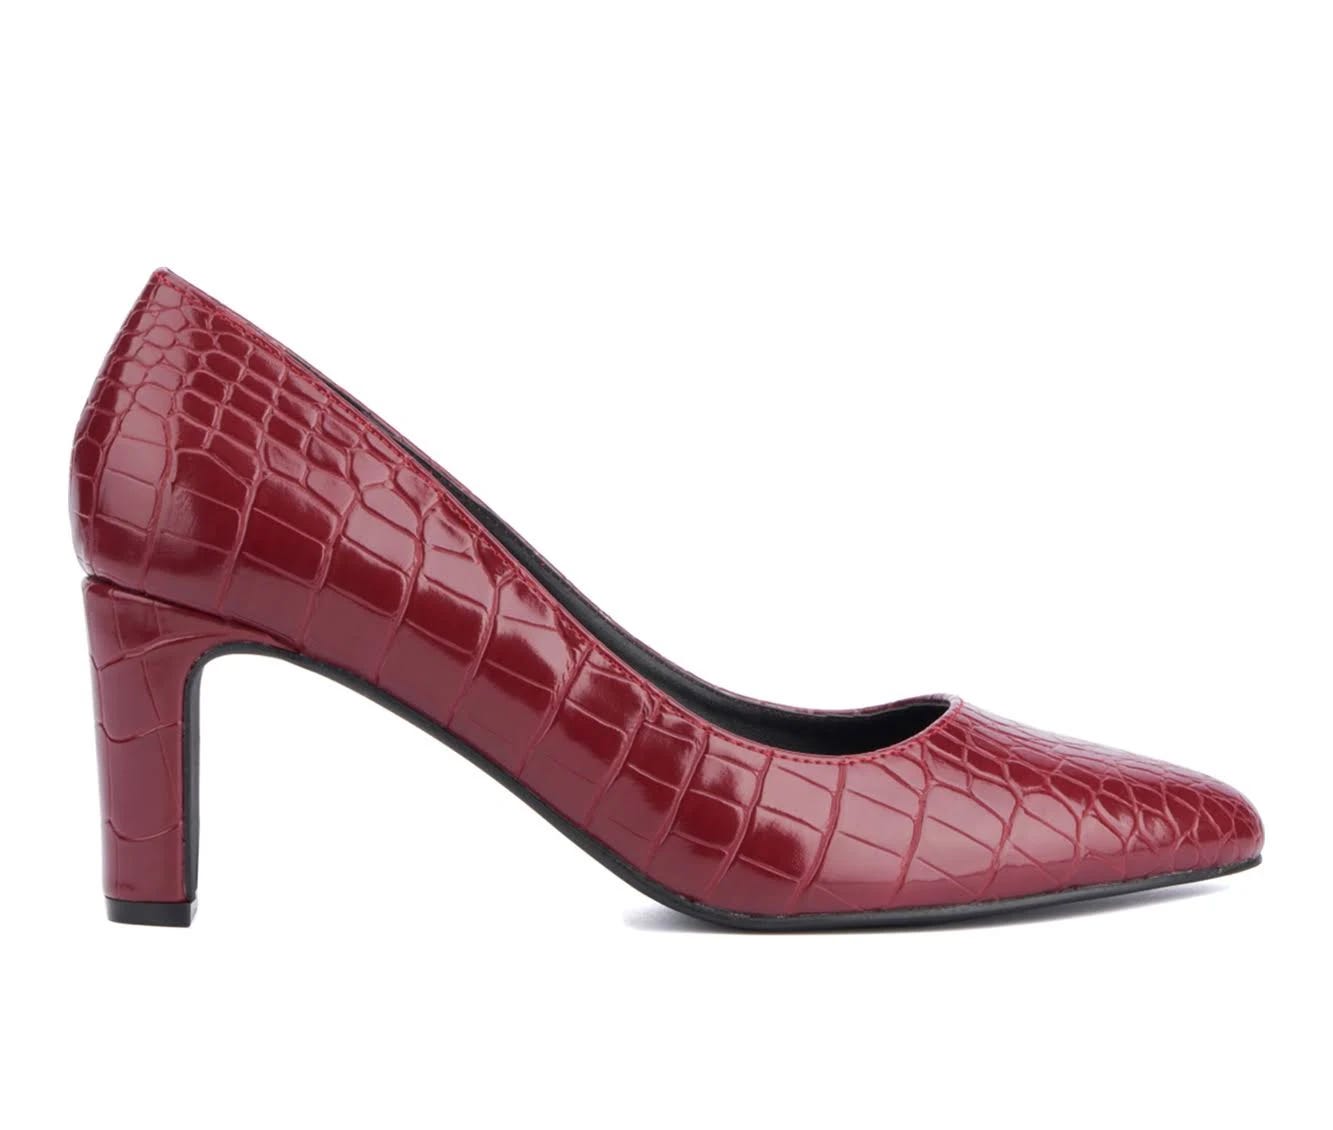 Sexy Wine Croc Wide Width Pumps - Fashionable Heels for Women | Image